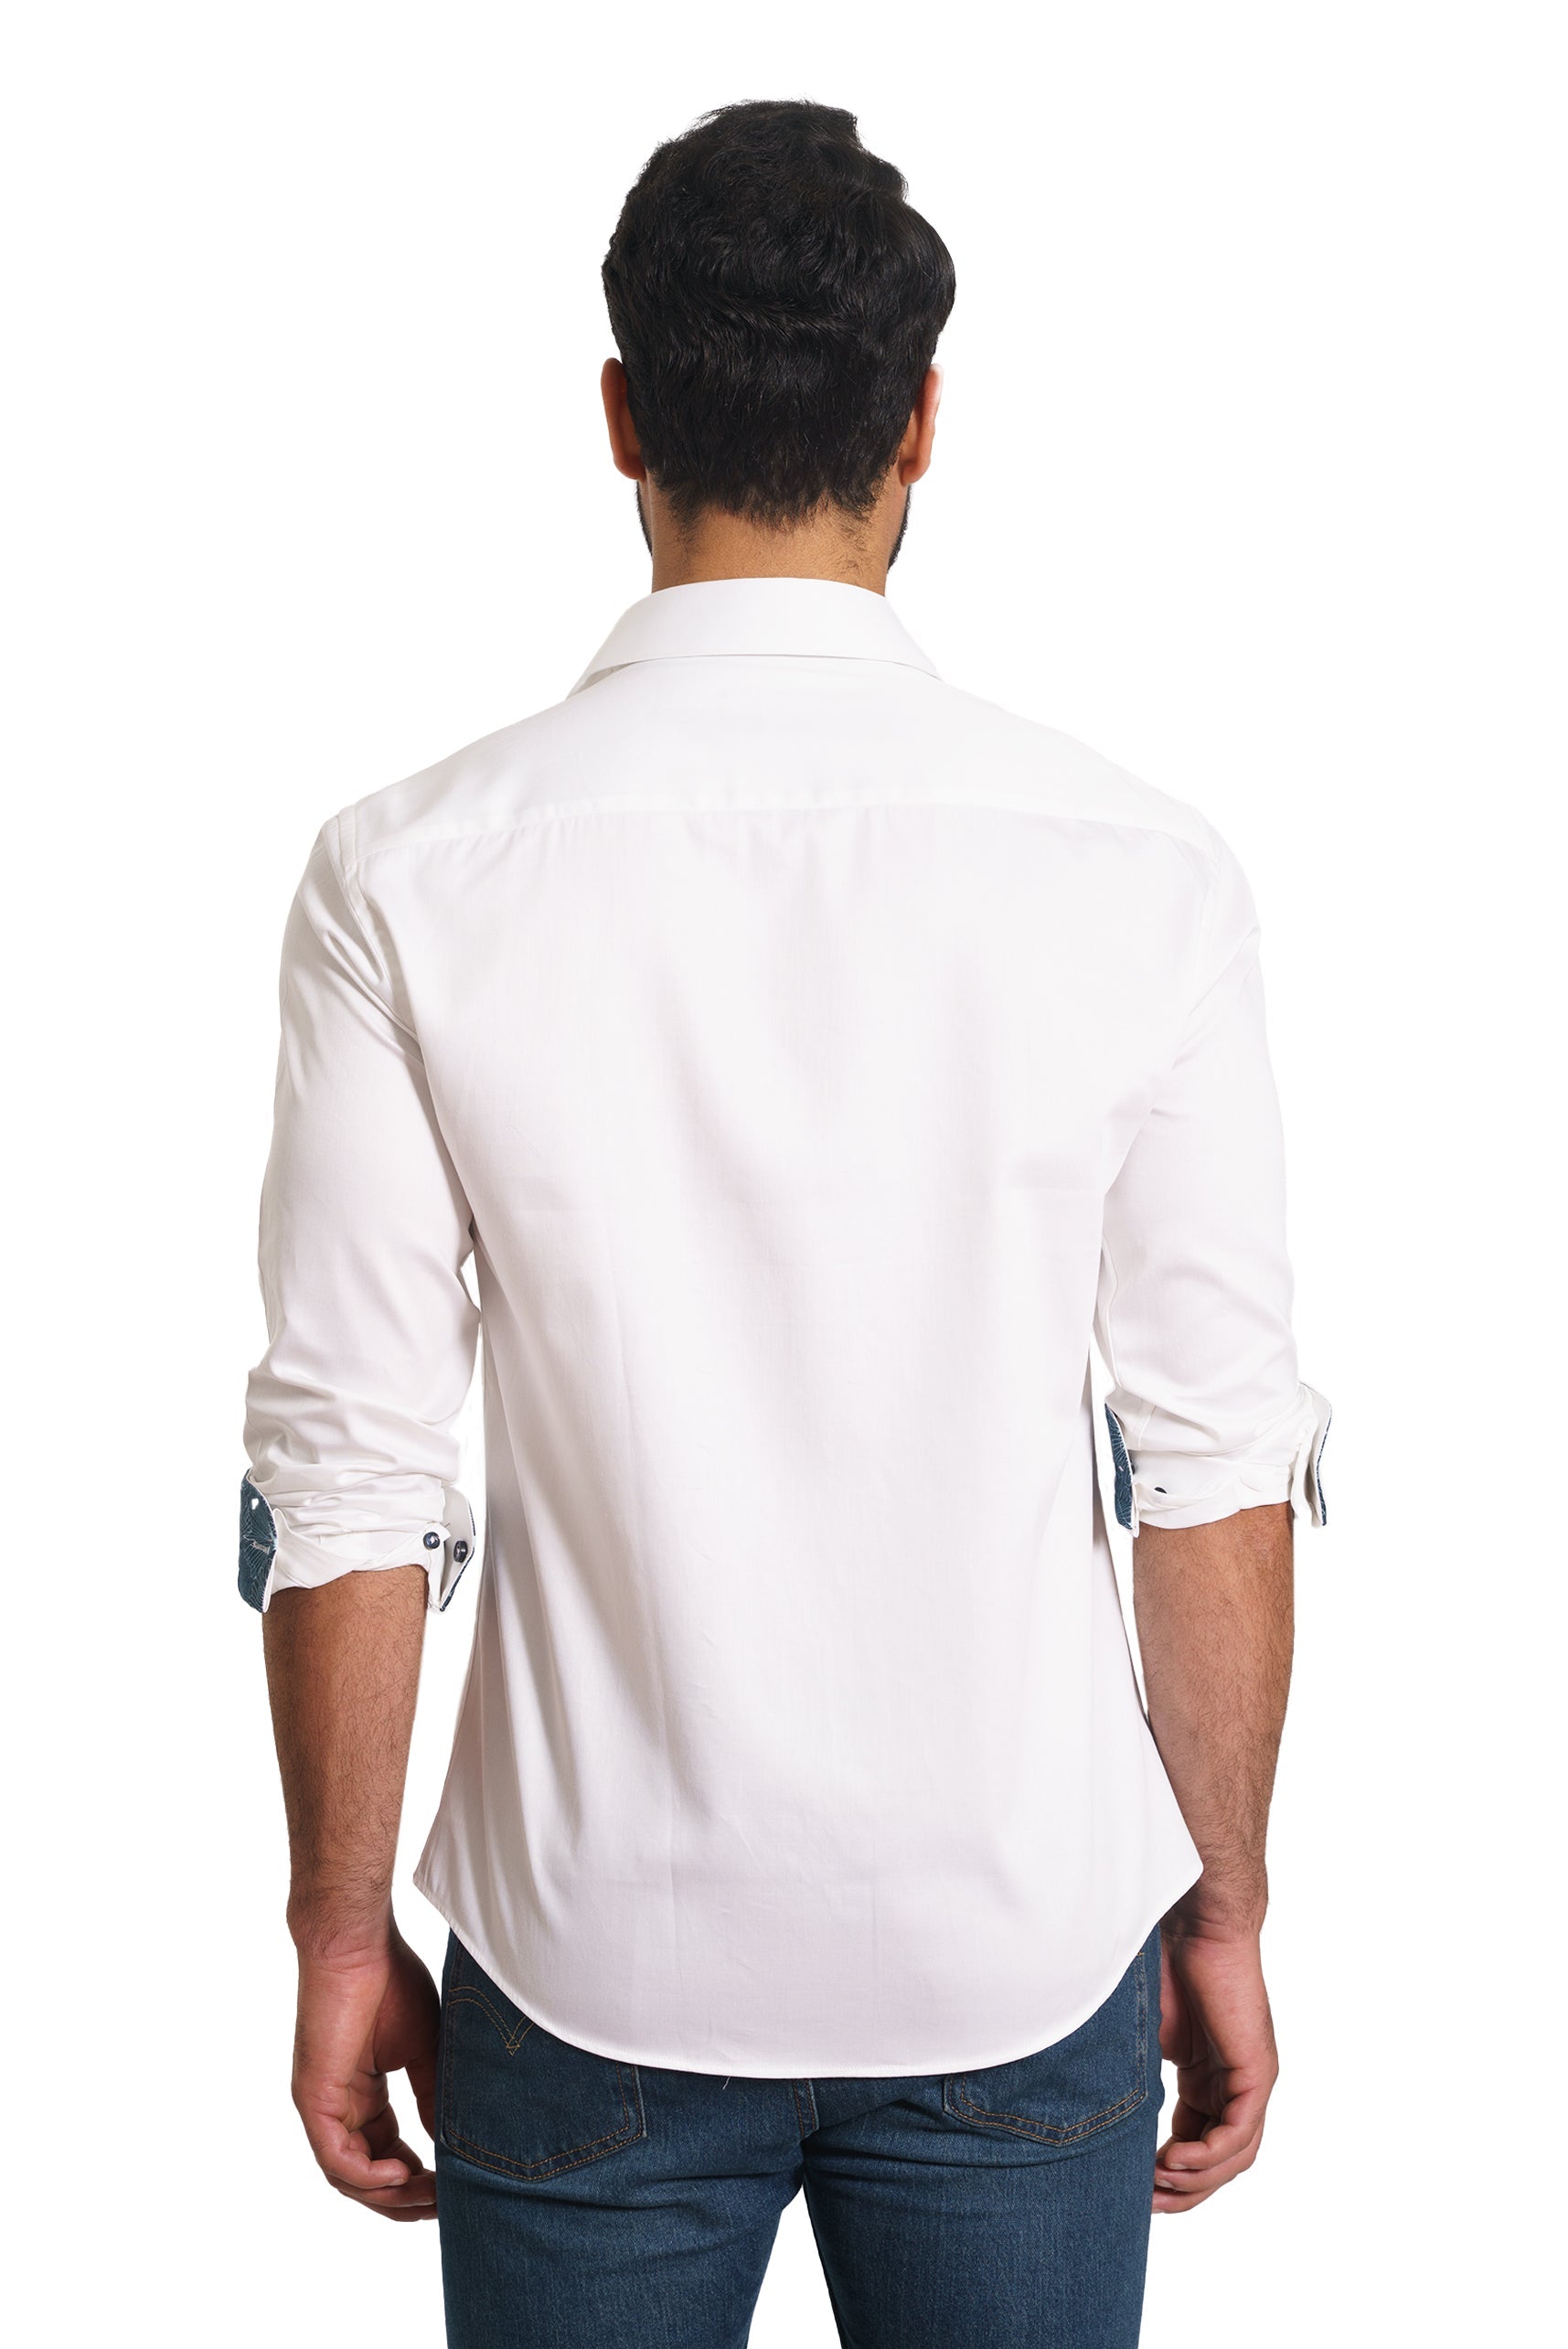 White Long Sleeve Shirt TH-2863 Back